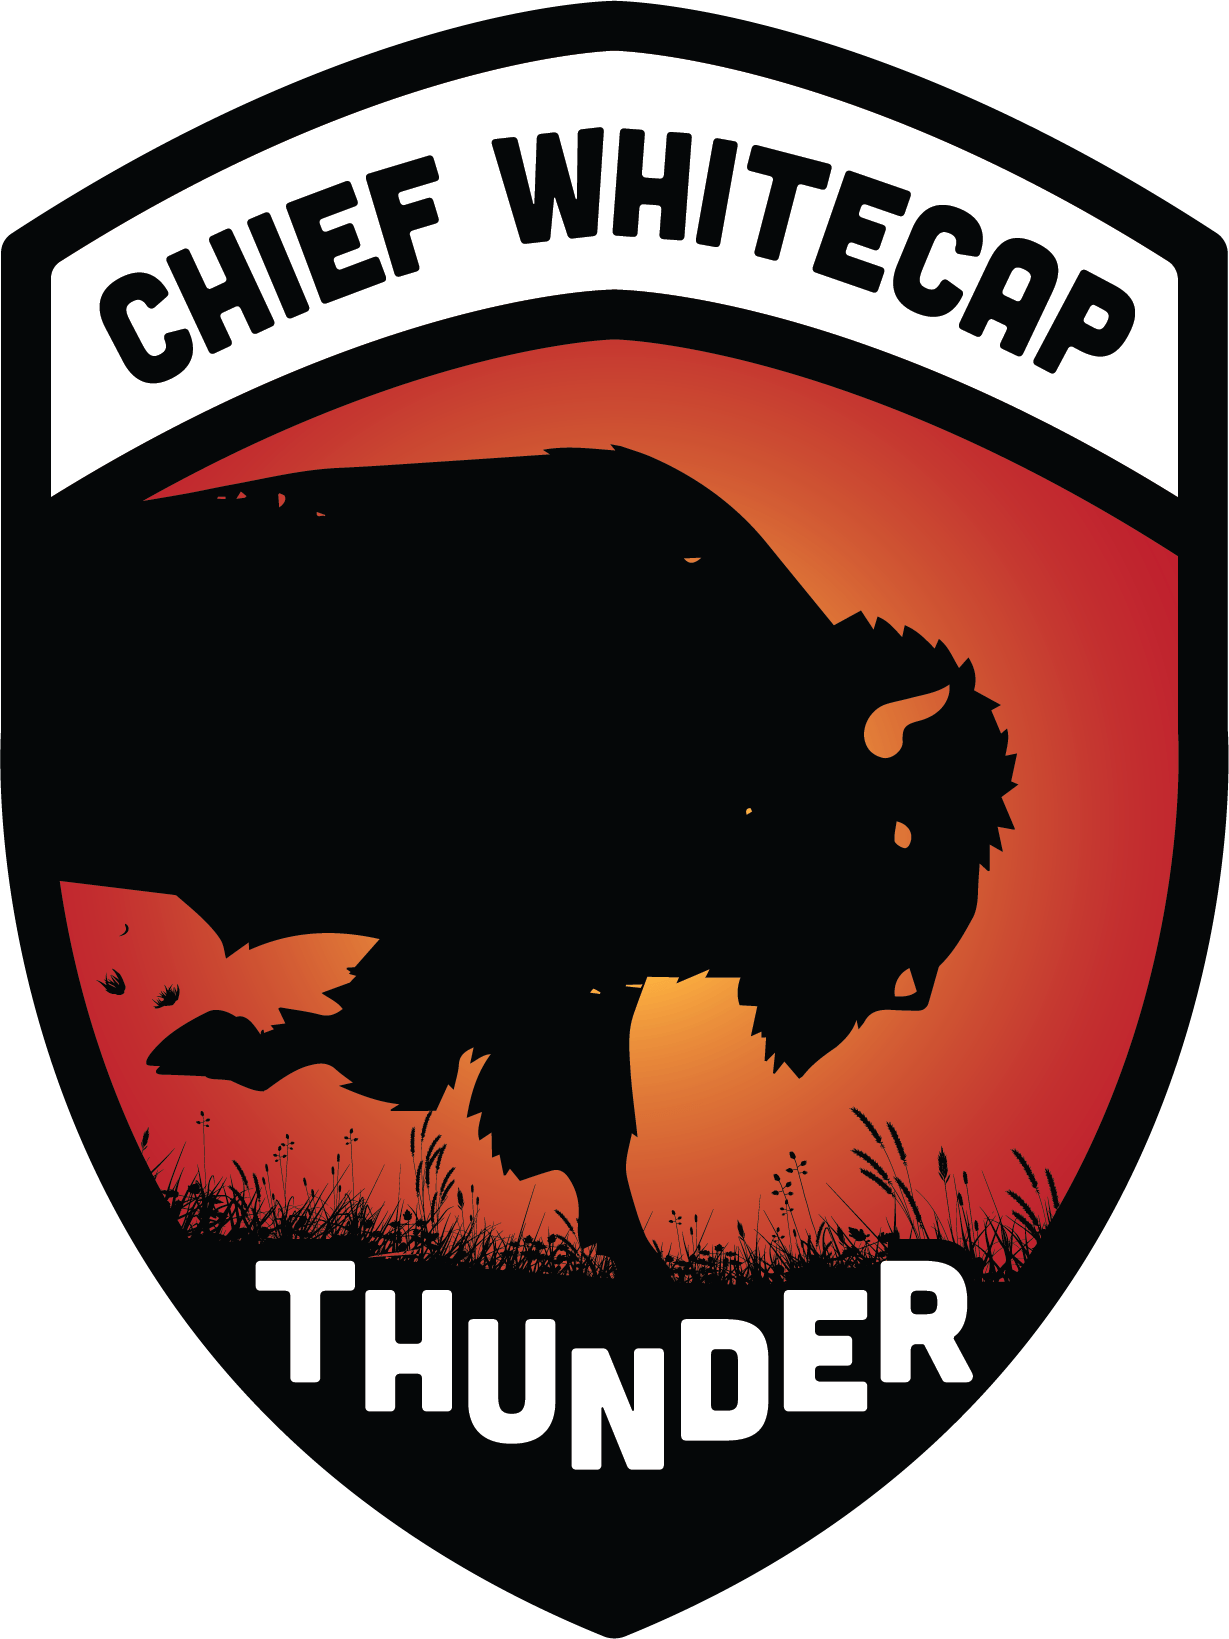 White Cap Logo - Chief Whitecap School Whitecap School